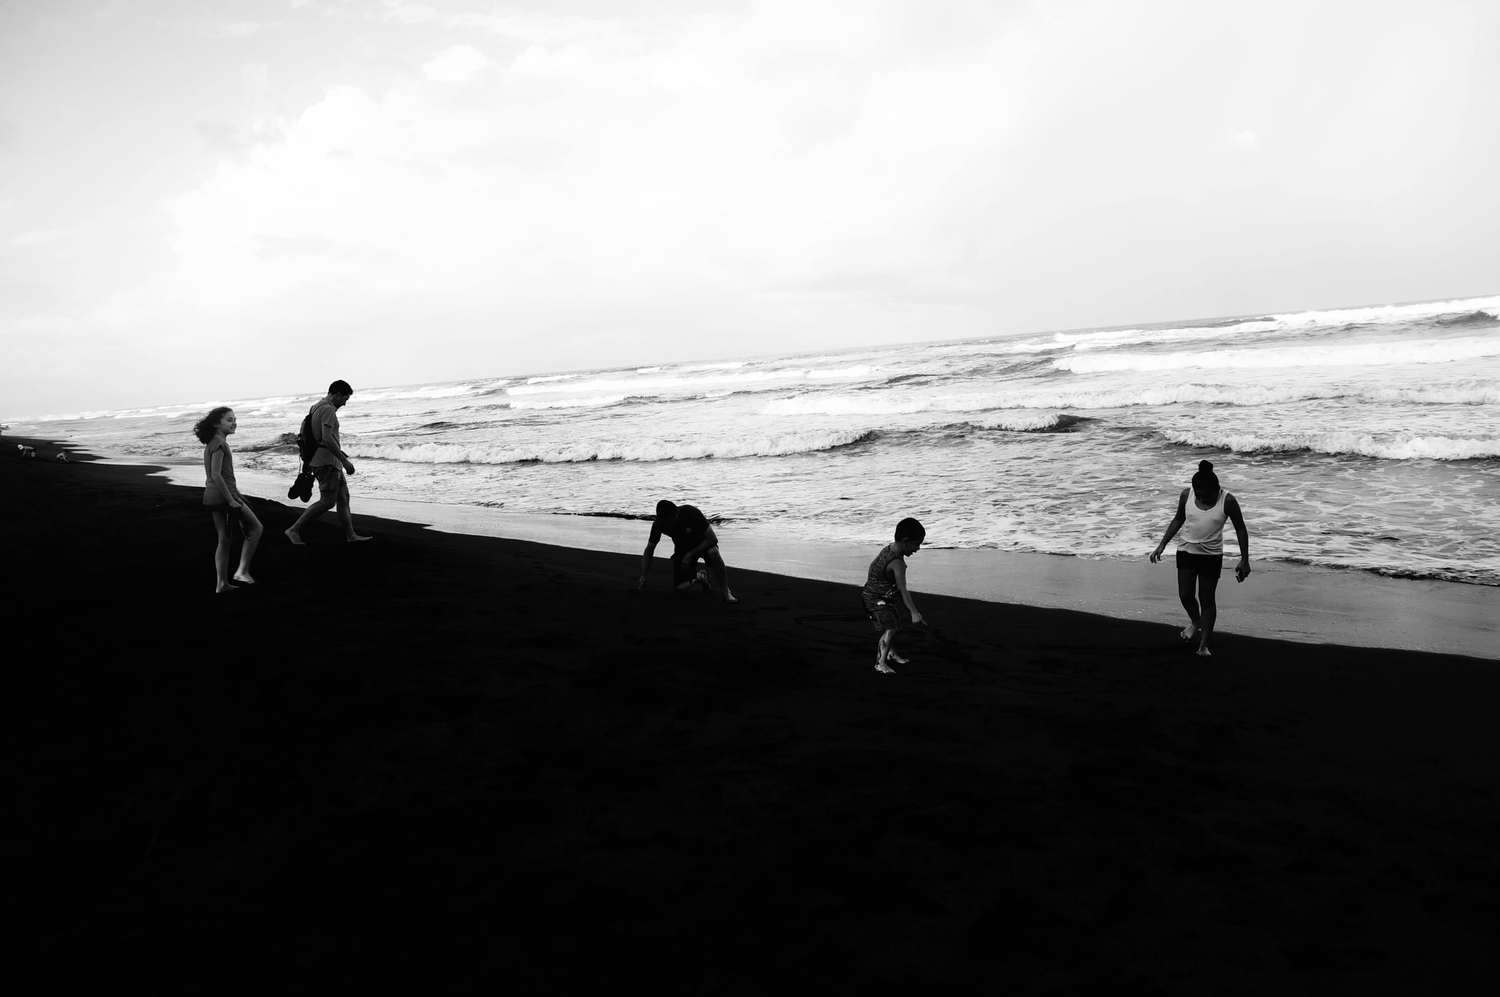 costa rica,children, black and white, world'schildren, street photography, art